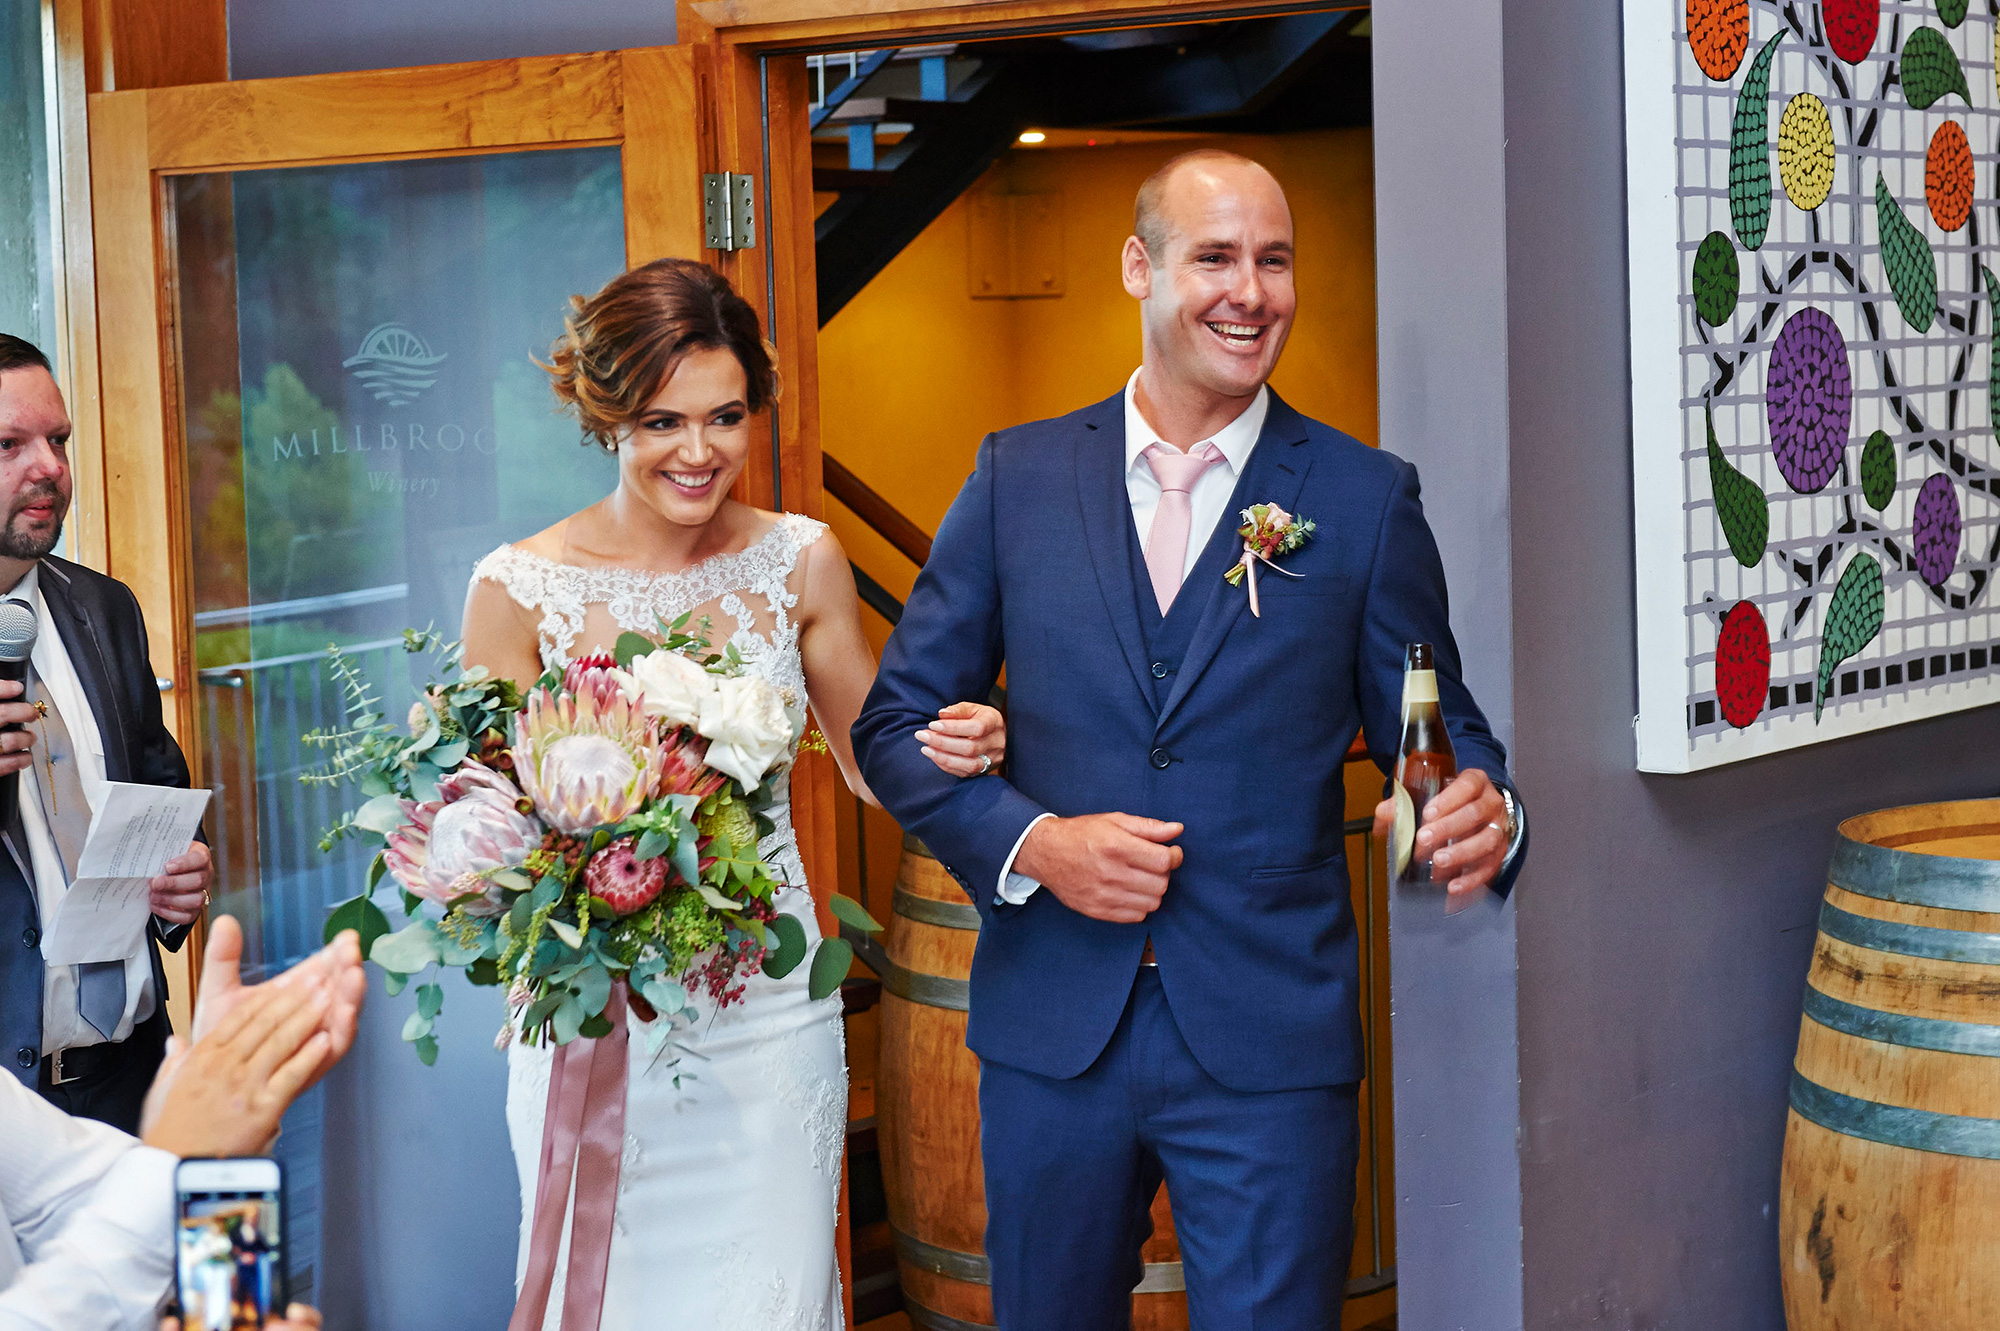 Adelaide_Ben_Rustic-Vineyard-Wedding_Peter-Edwards-Photography_037